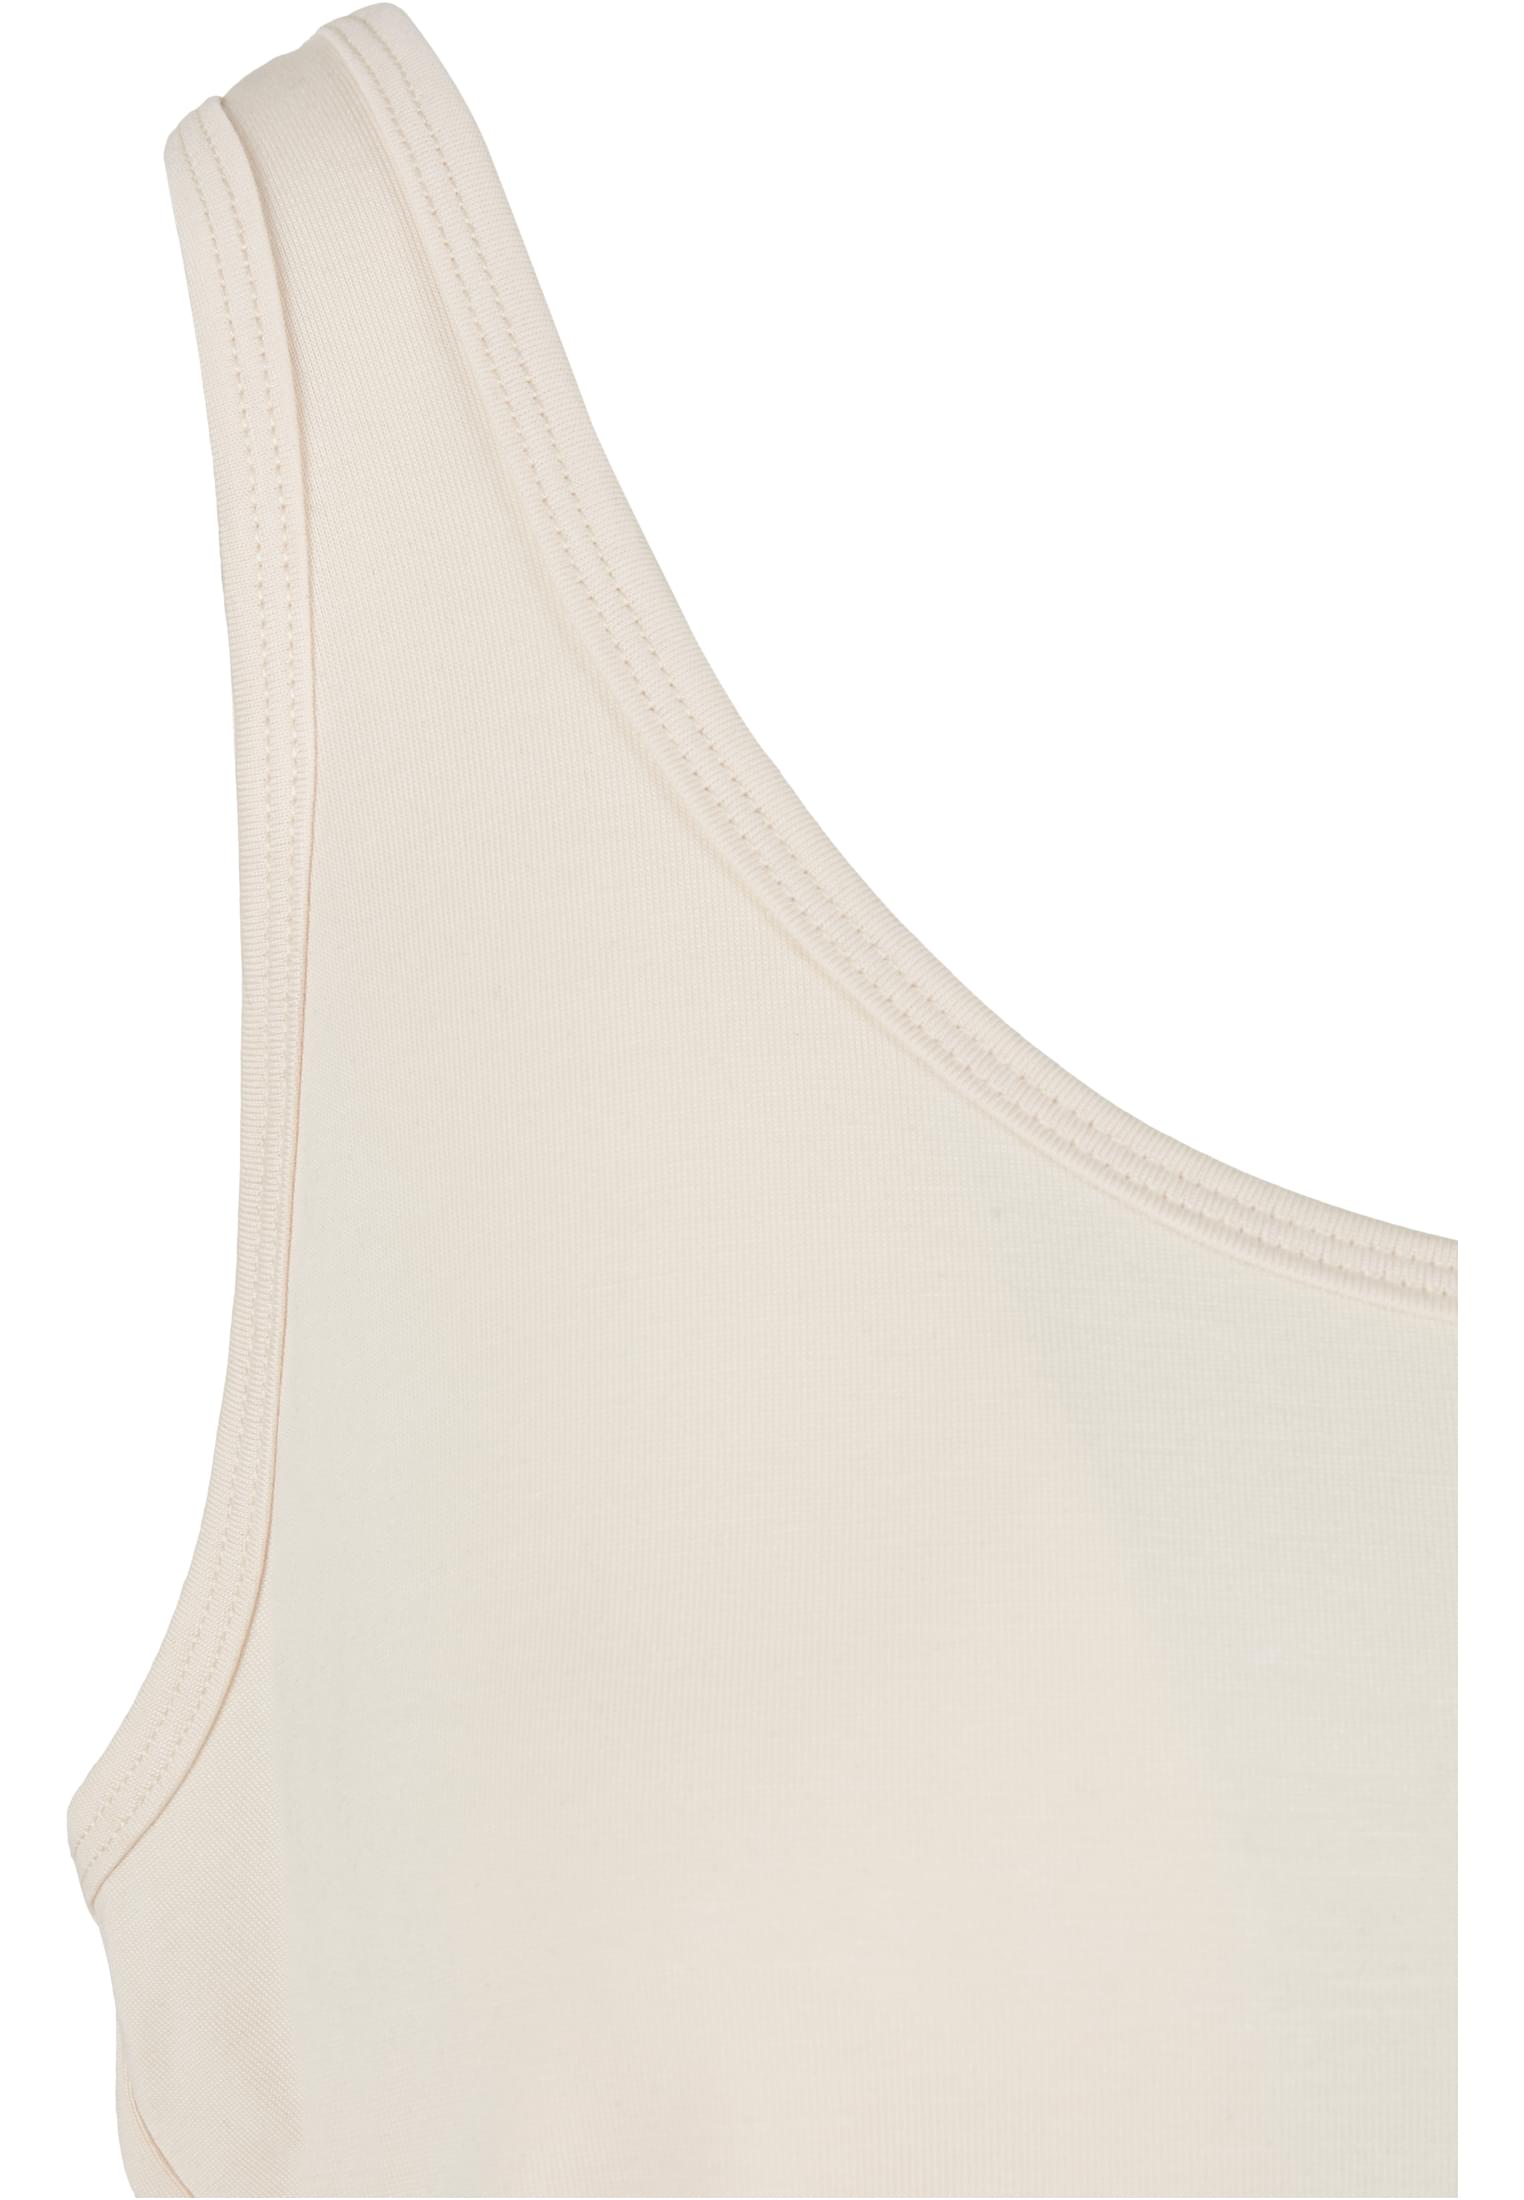 Frauen Ladies Modal Loose Top in Farbe whitesand